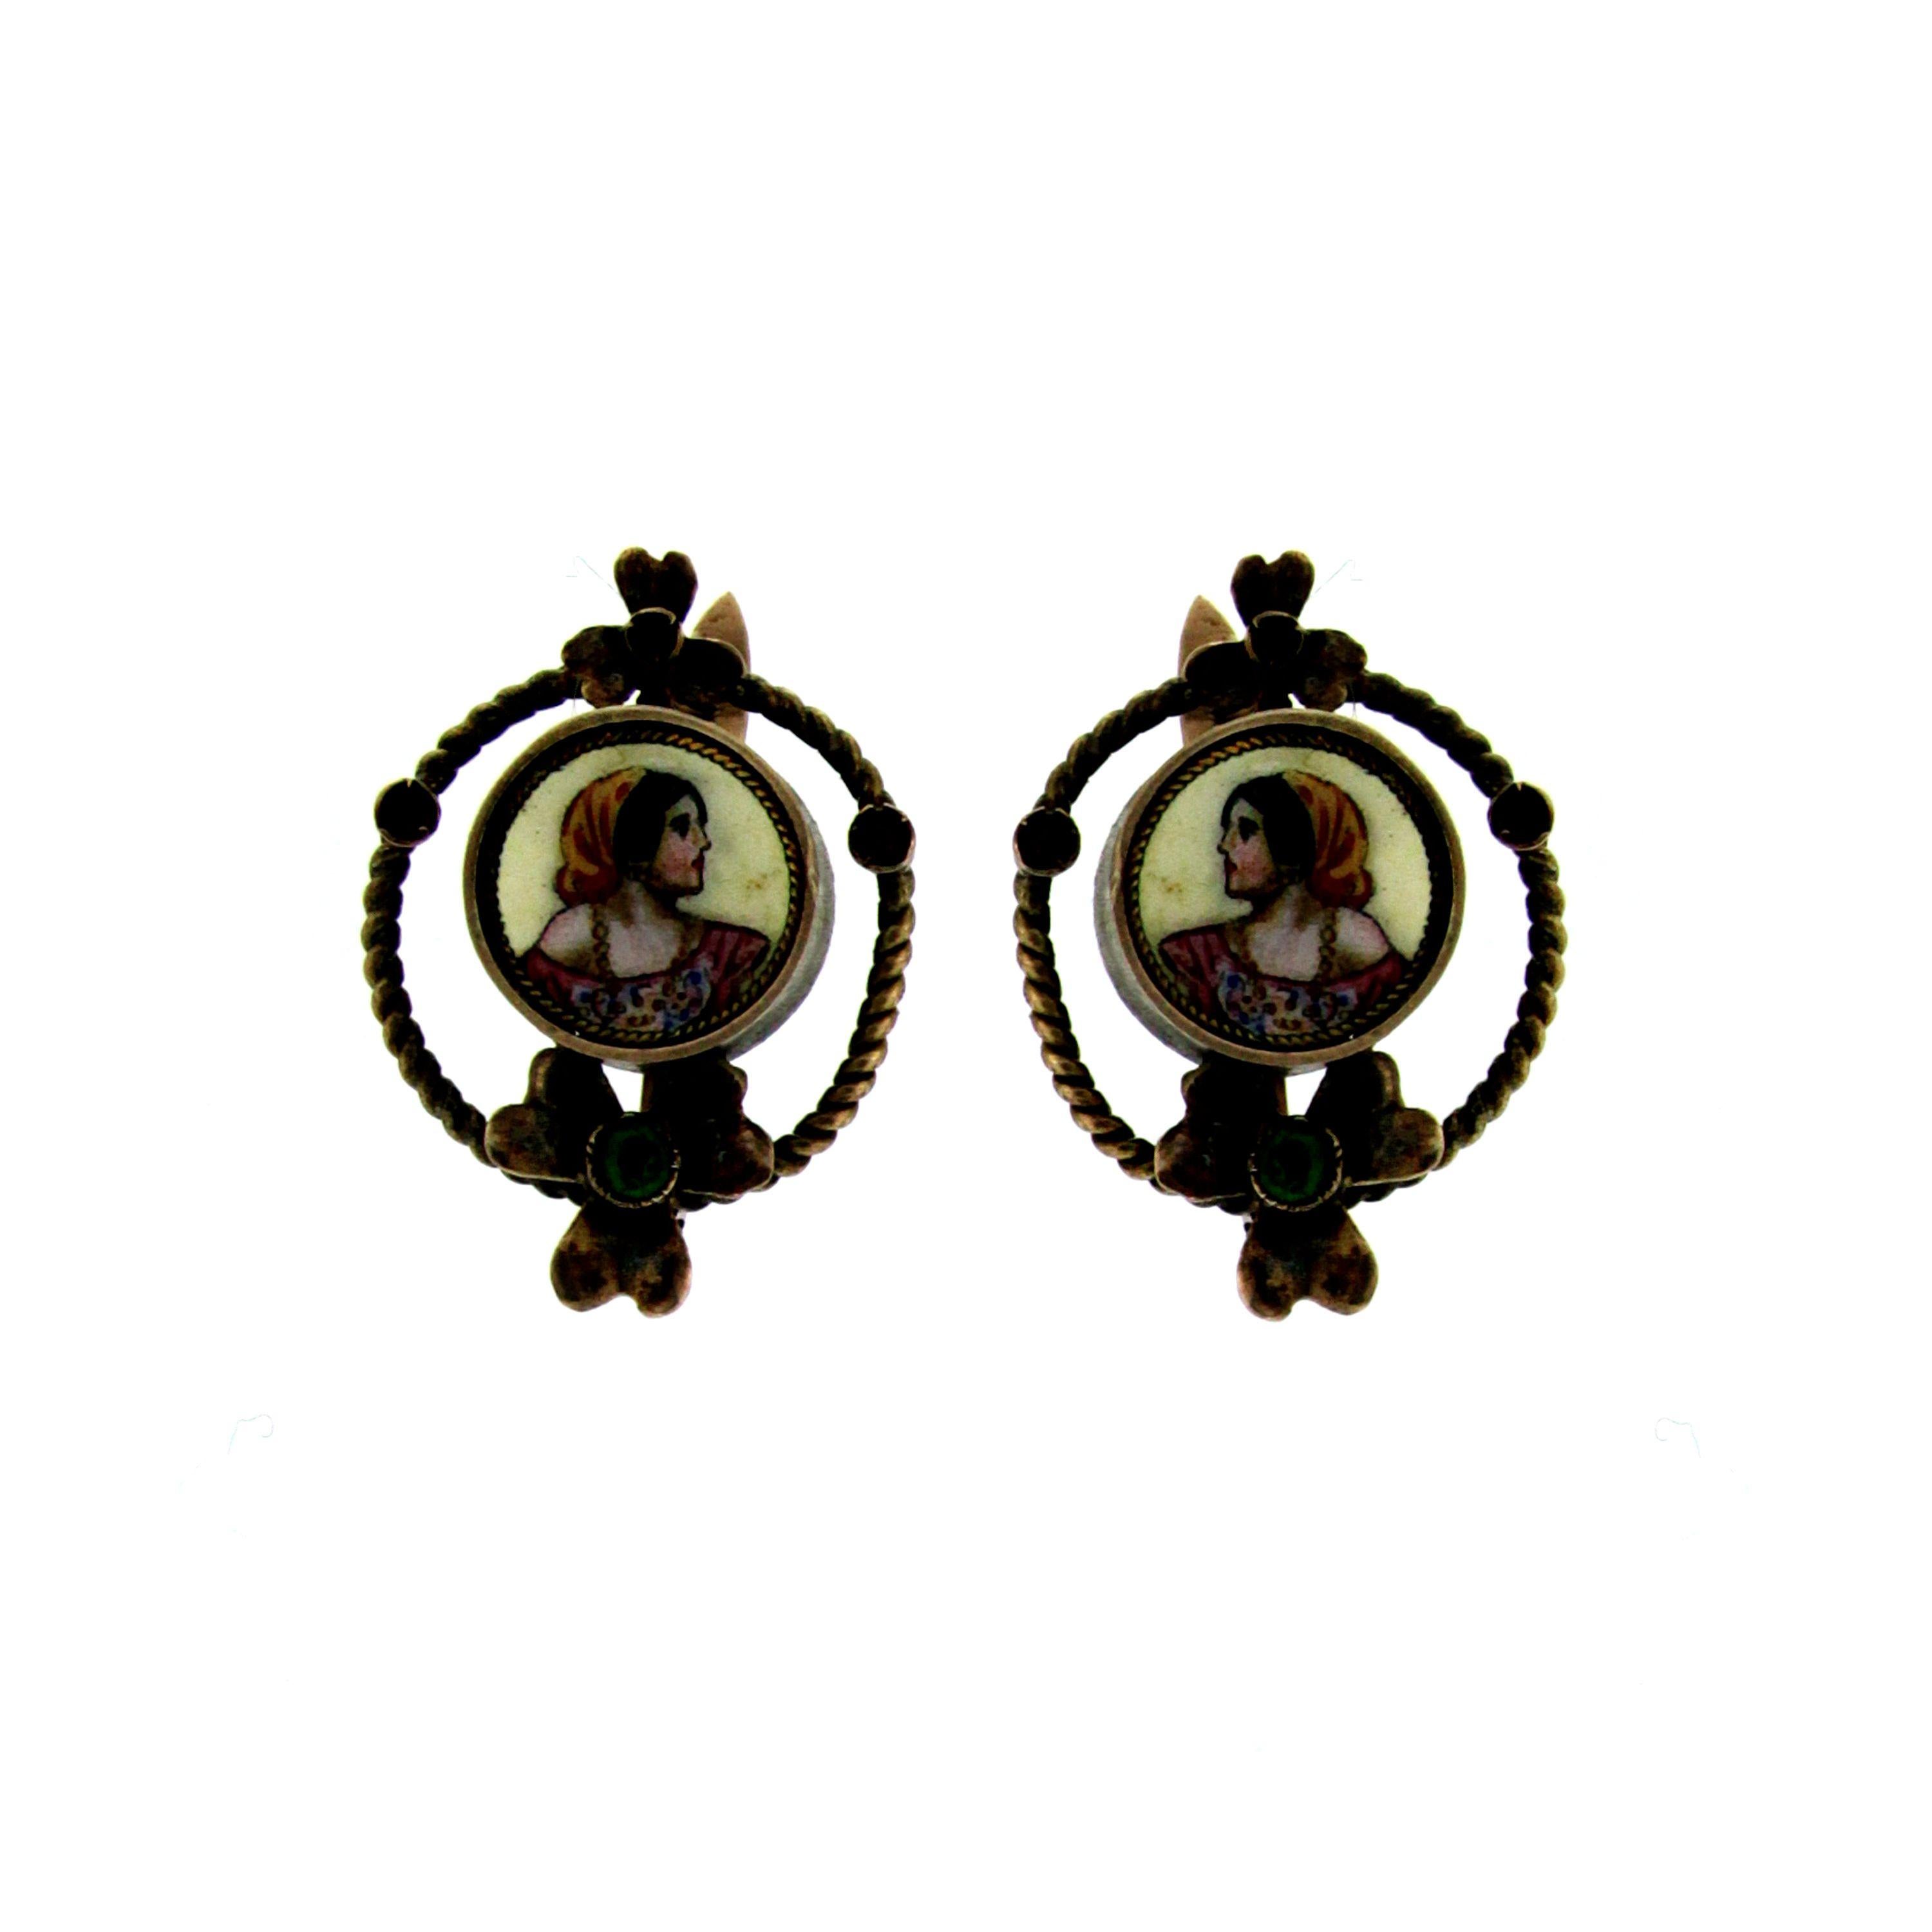 1800 Gold Earrings with Enamel Miniatures